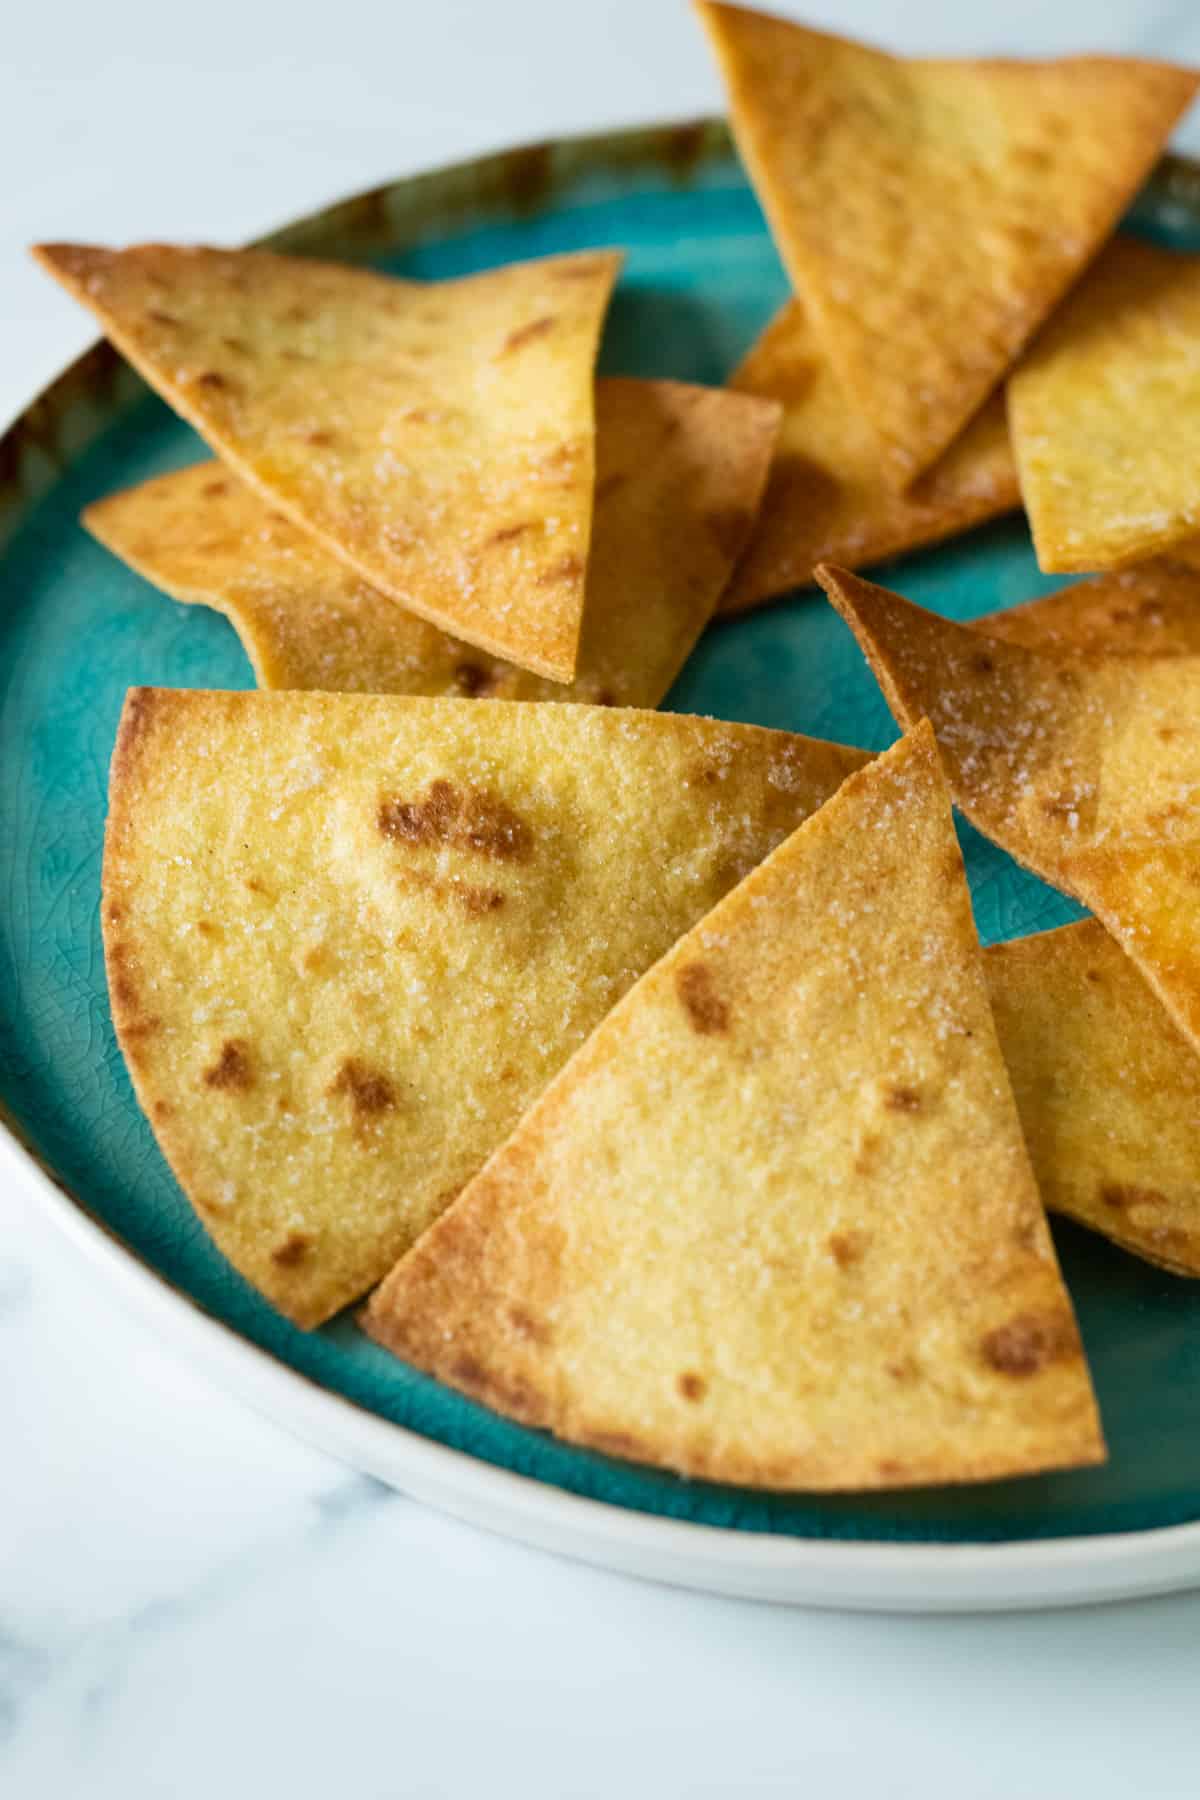 homemade tortilla chips on a blue plate